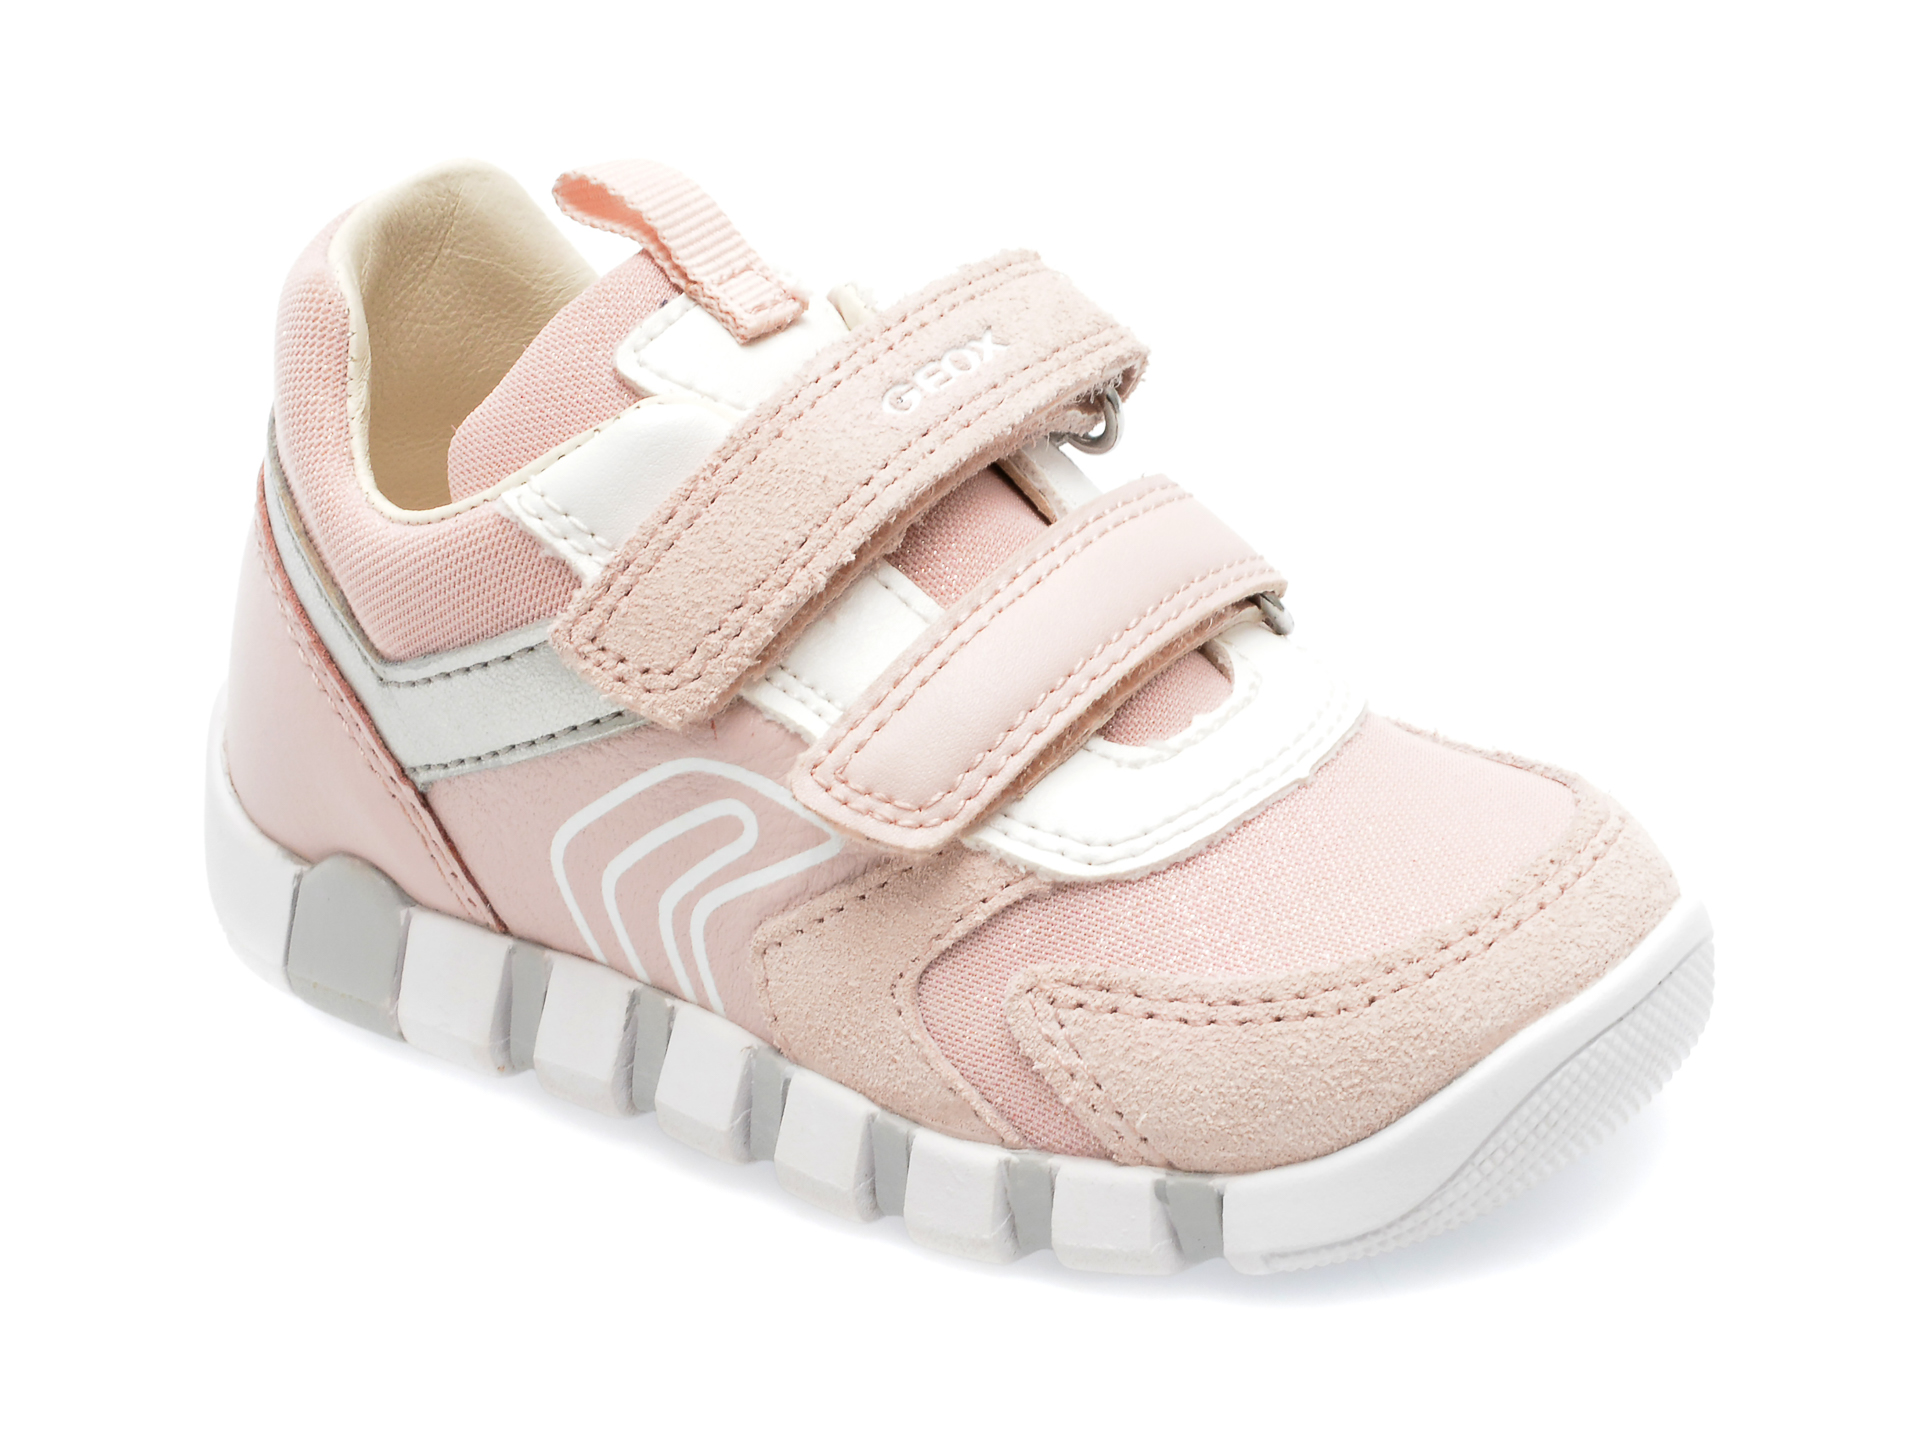 Pantofi GEOX roz, B3558C, din piele naturala /copii/incaltaminte